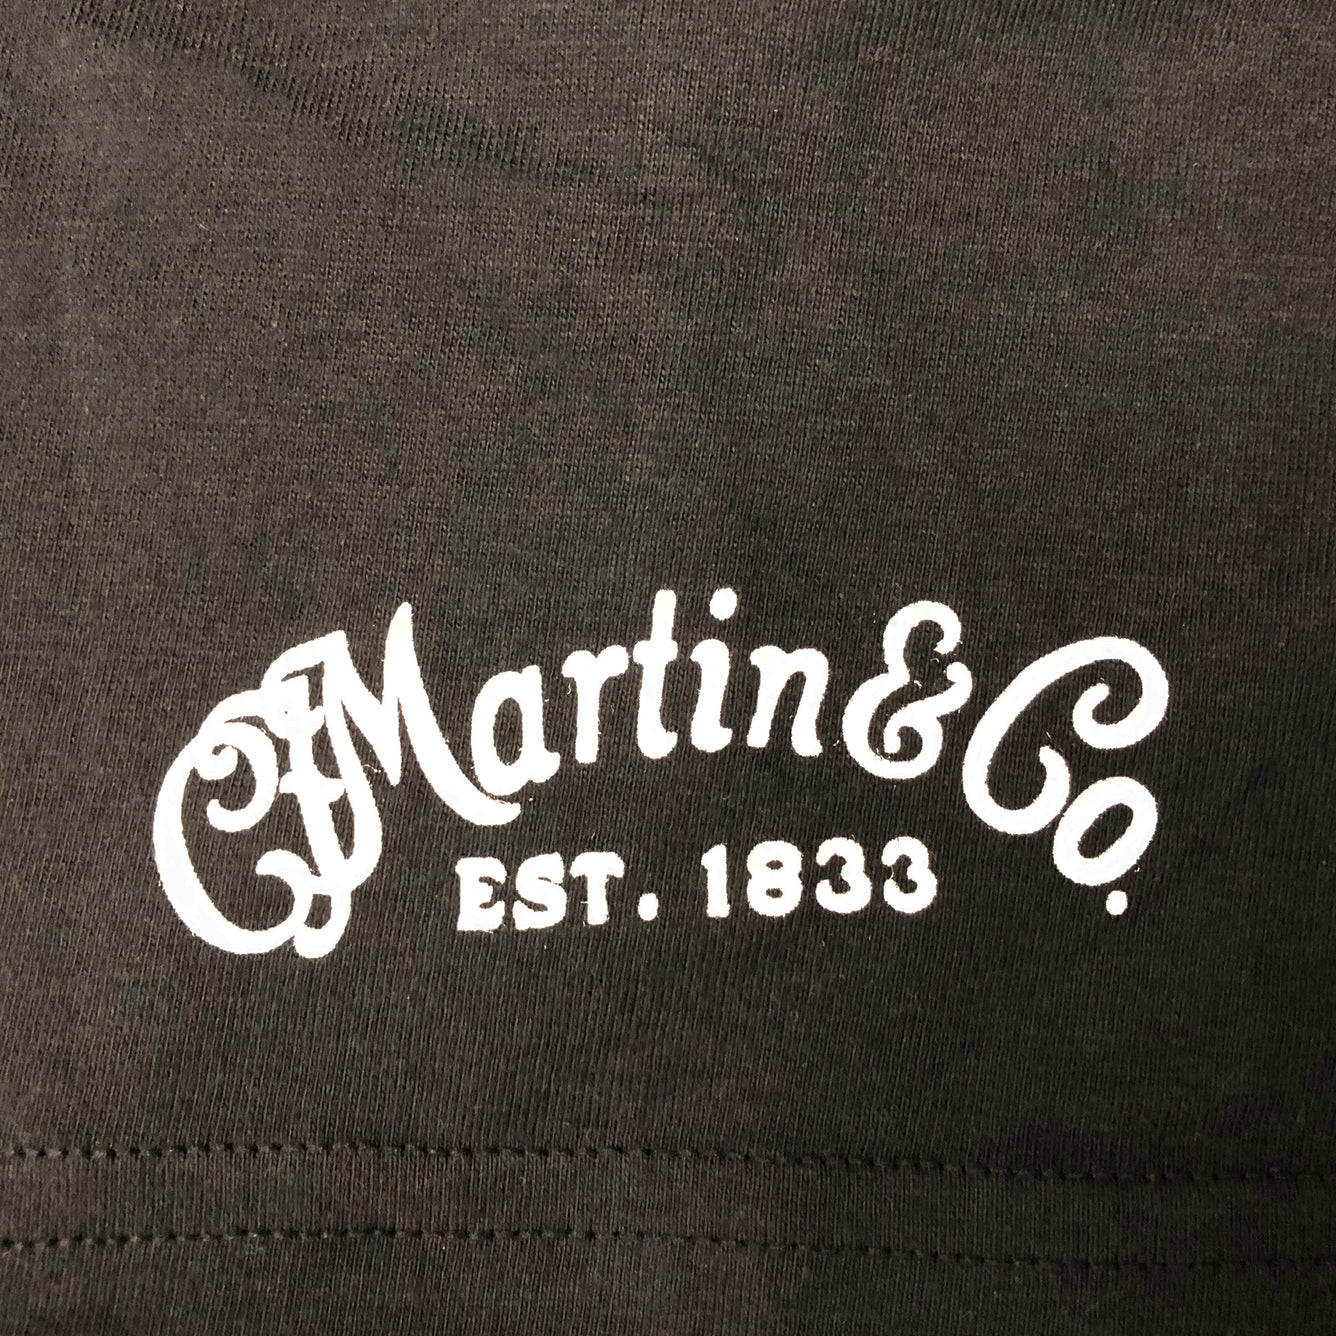 Martin Guitar Models Black Tee Shirt